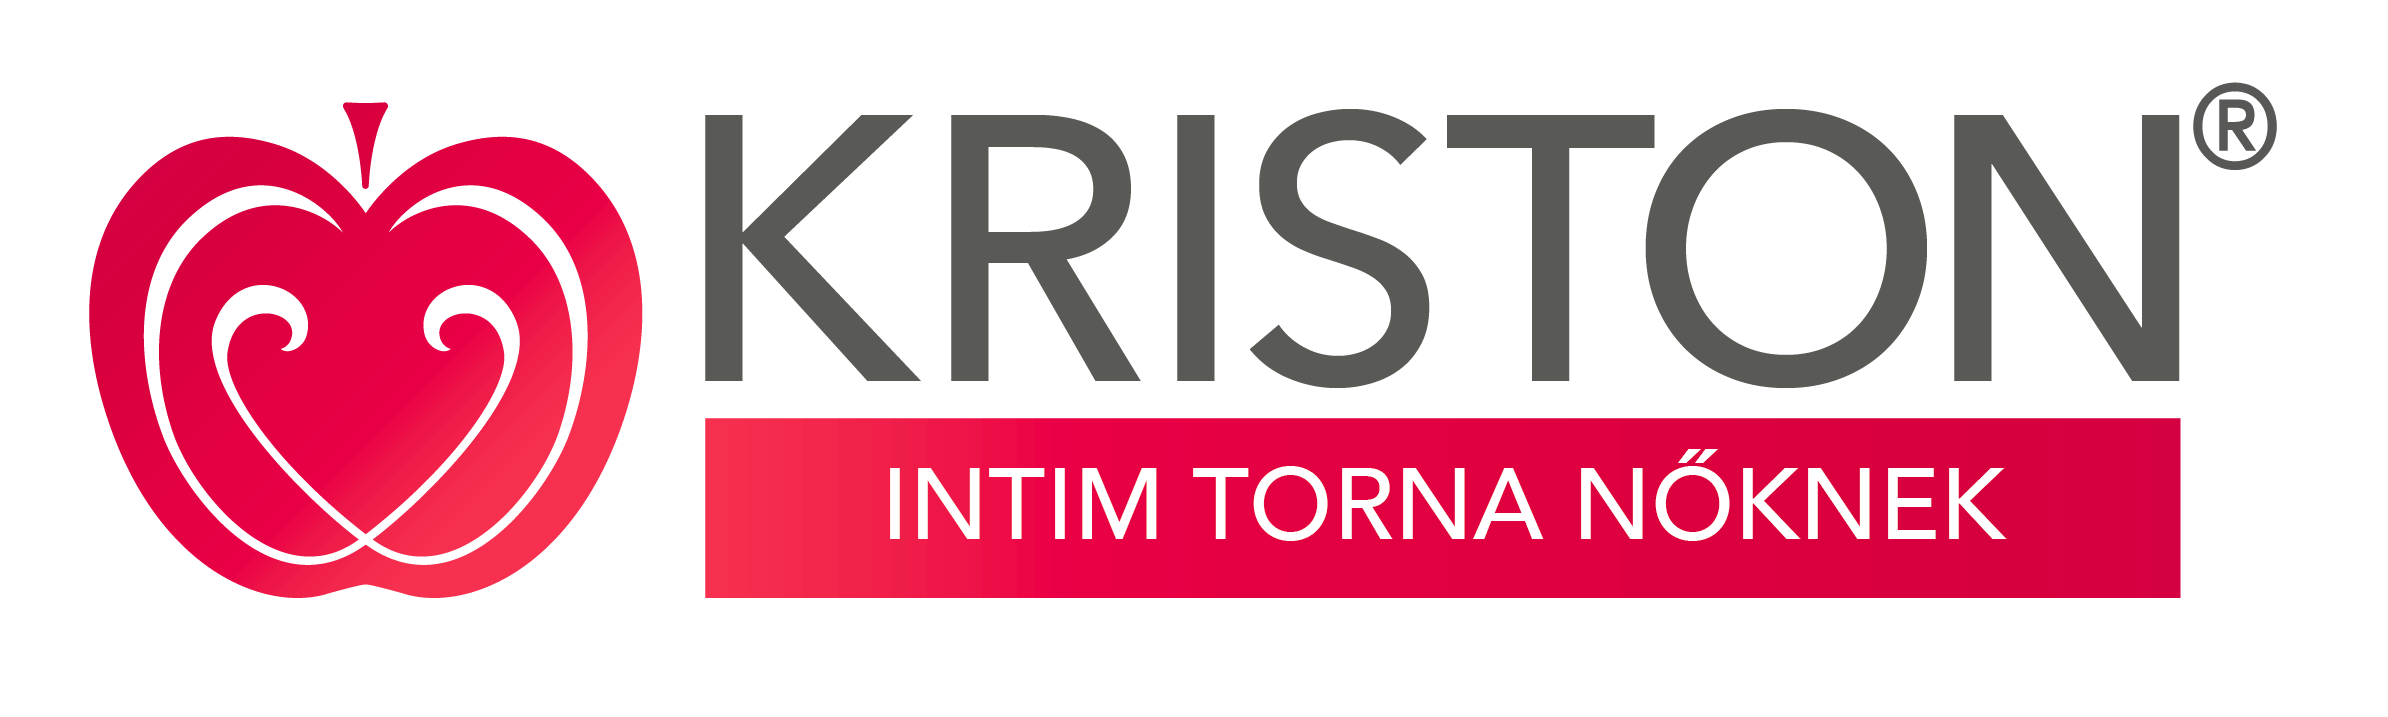 Kriston Intim Torna Logo